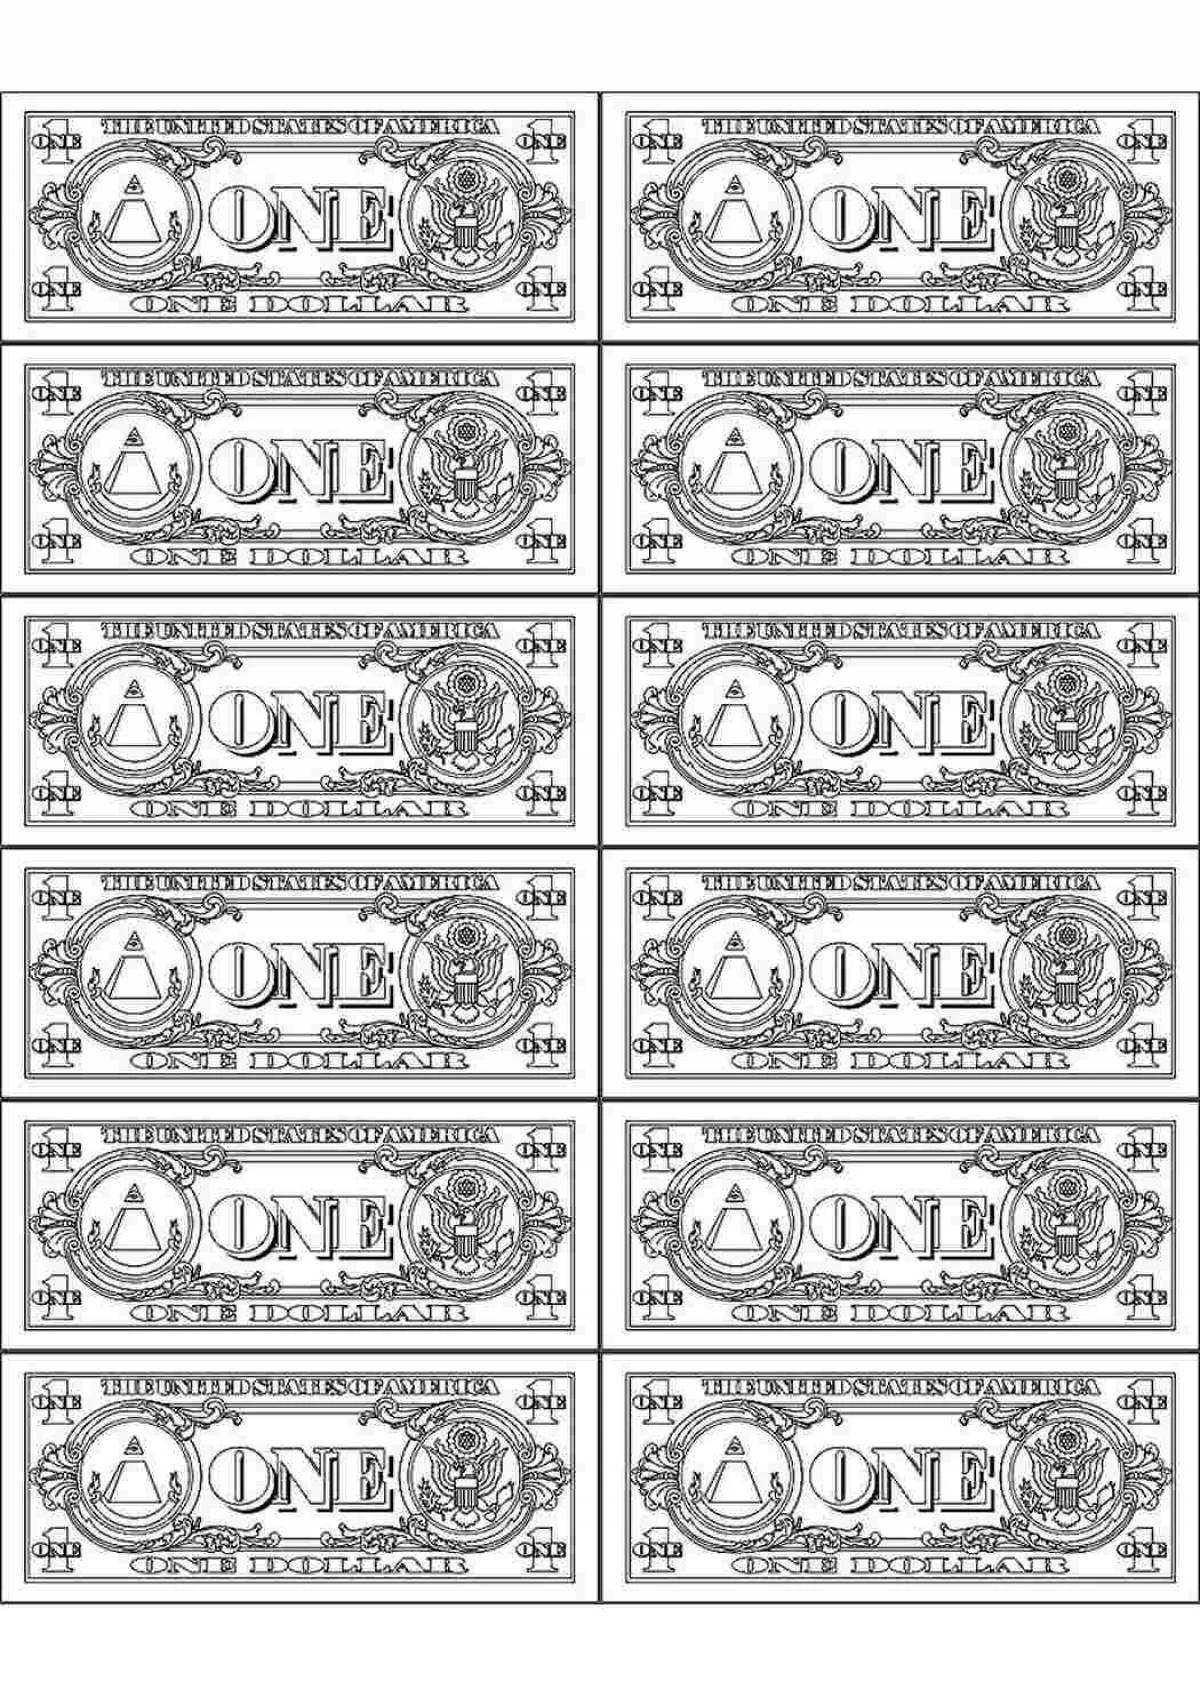 Paper money #3